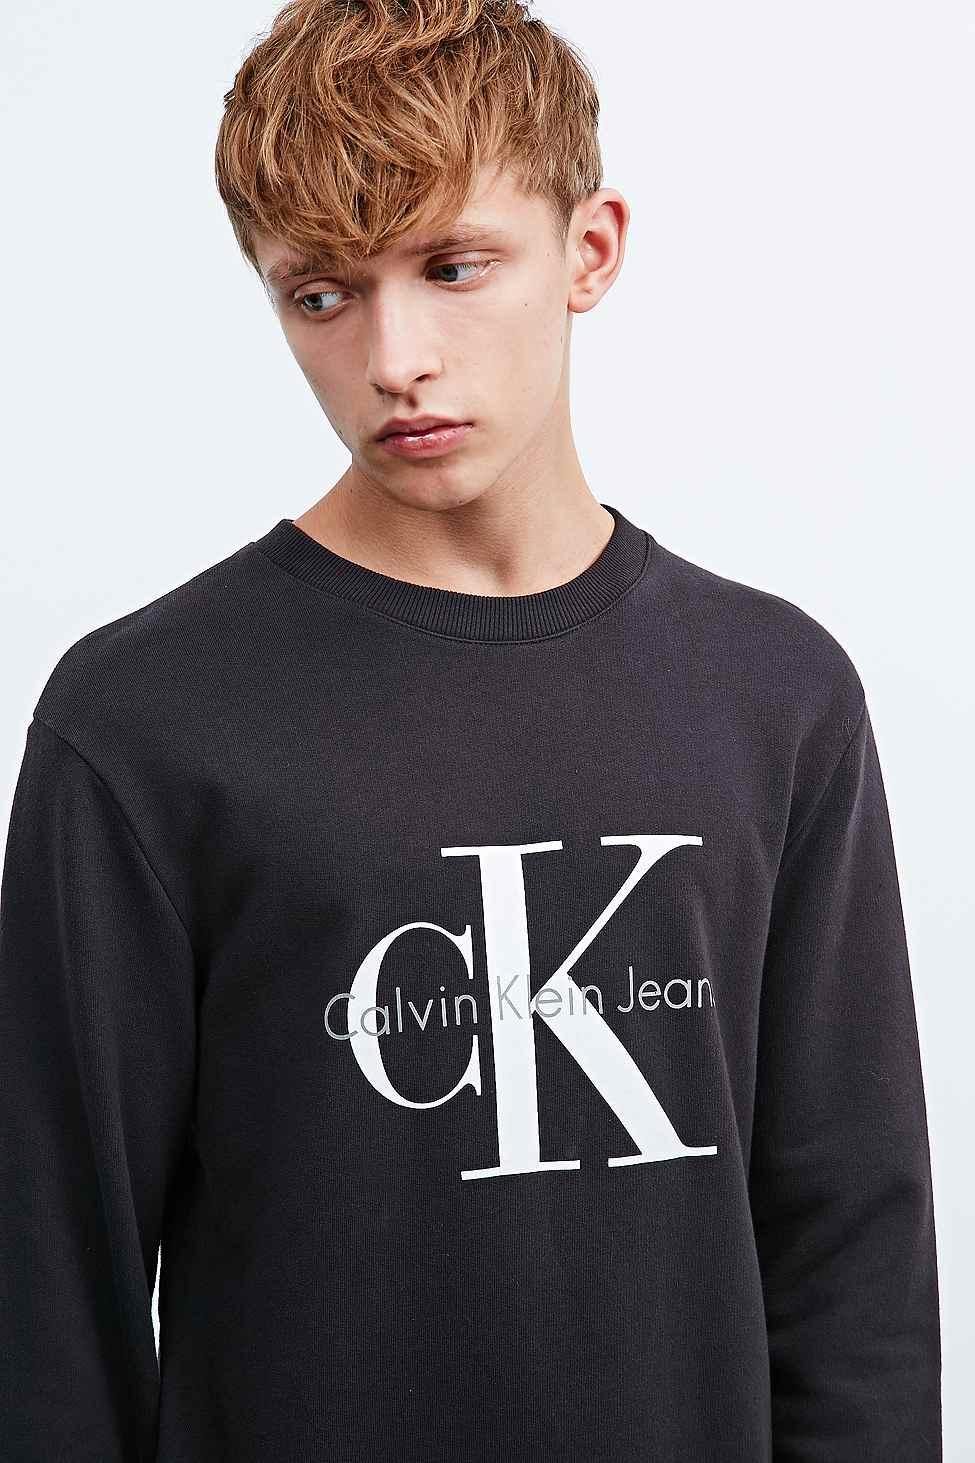 Calvin Klein Meteorite Sweatshirt Outlet, GET 51% OFF,  www.islandcrematorium.ie